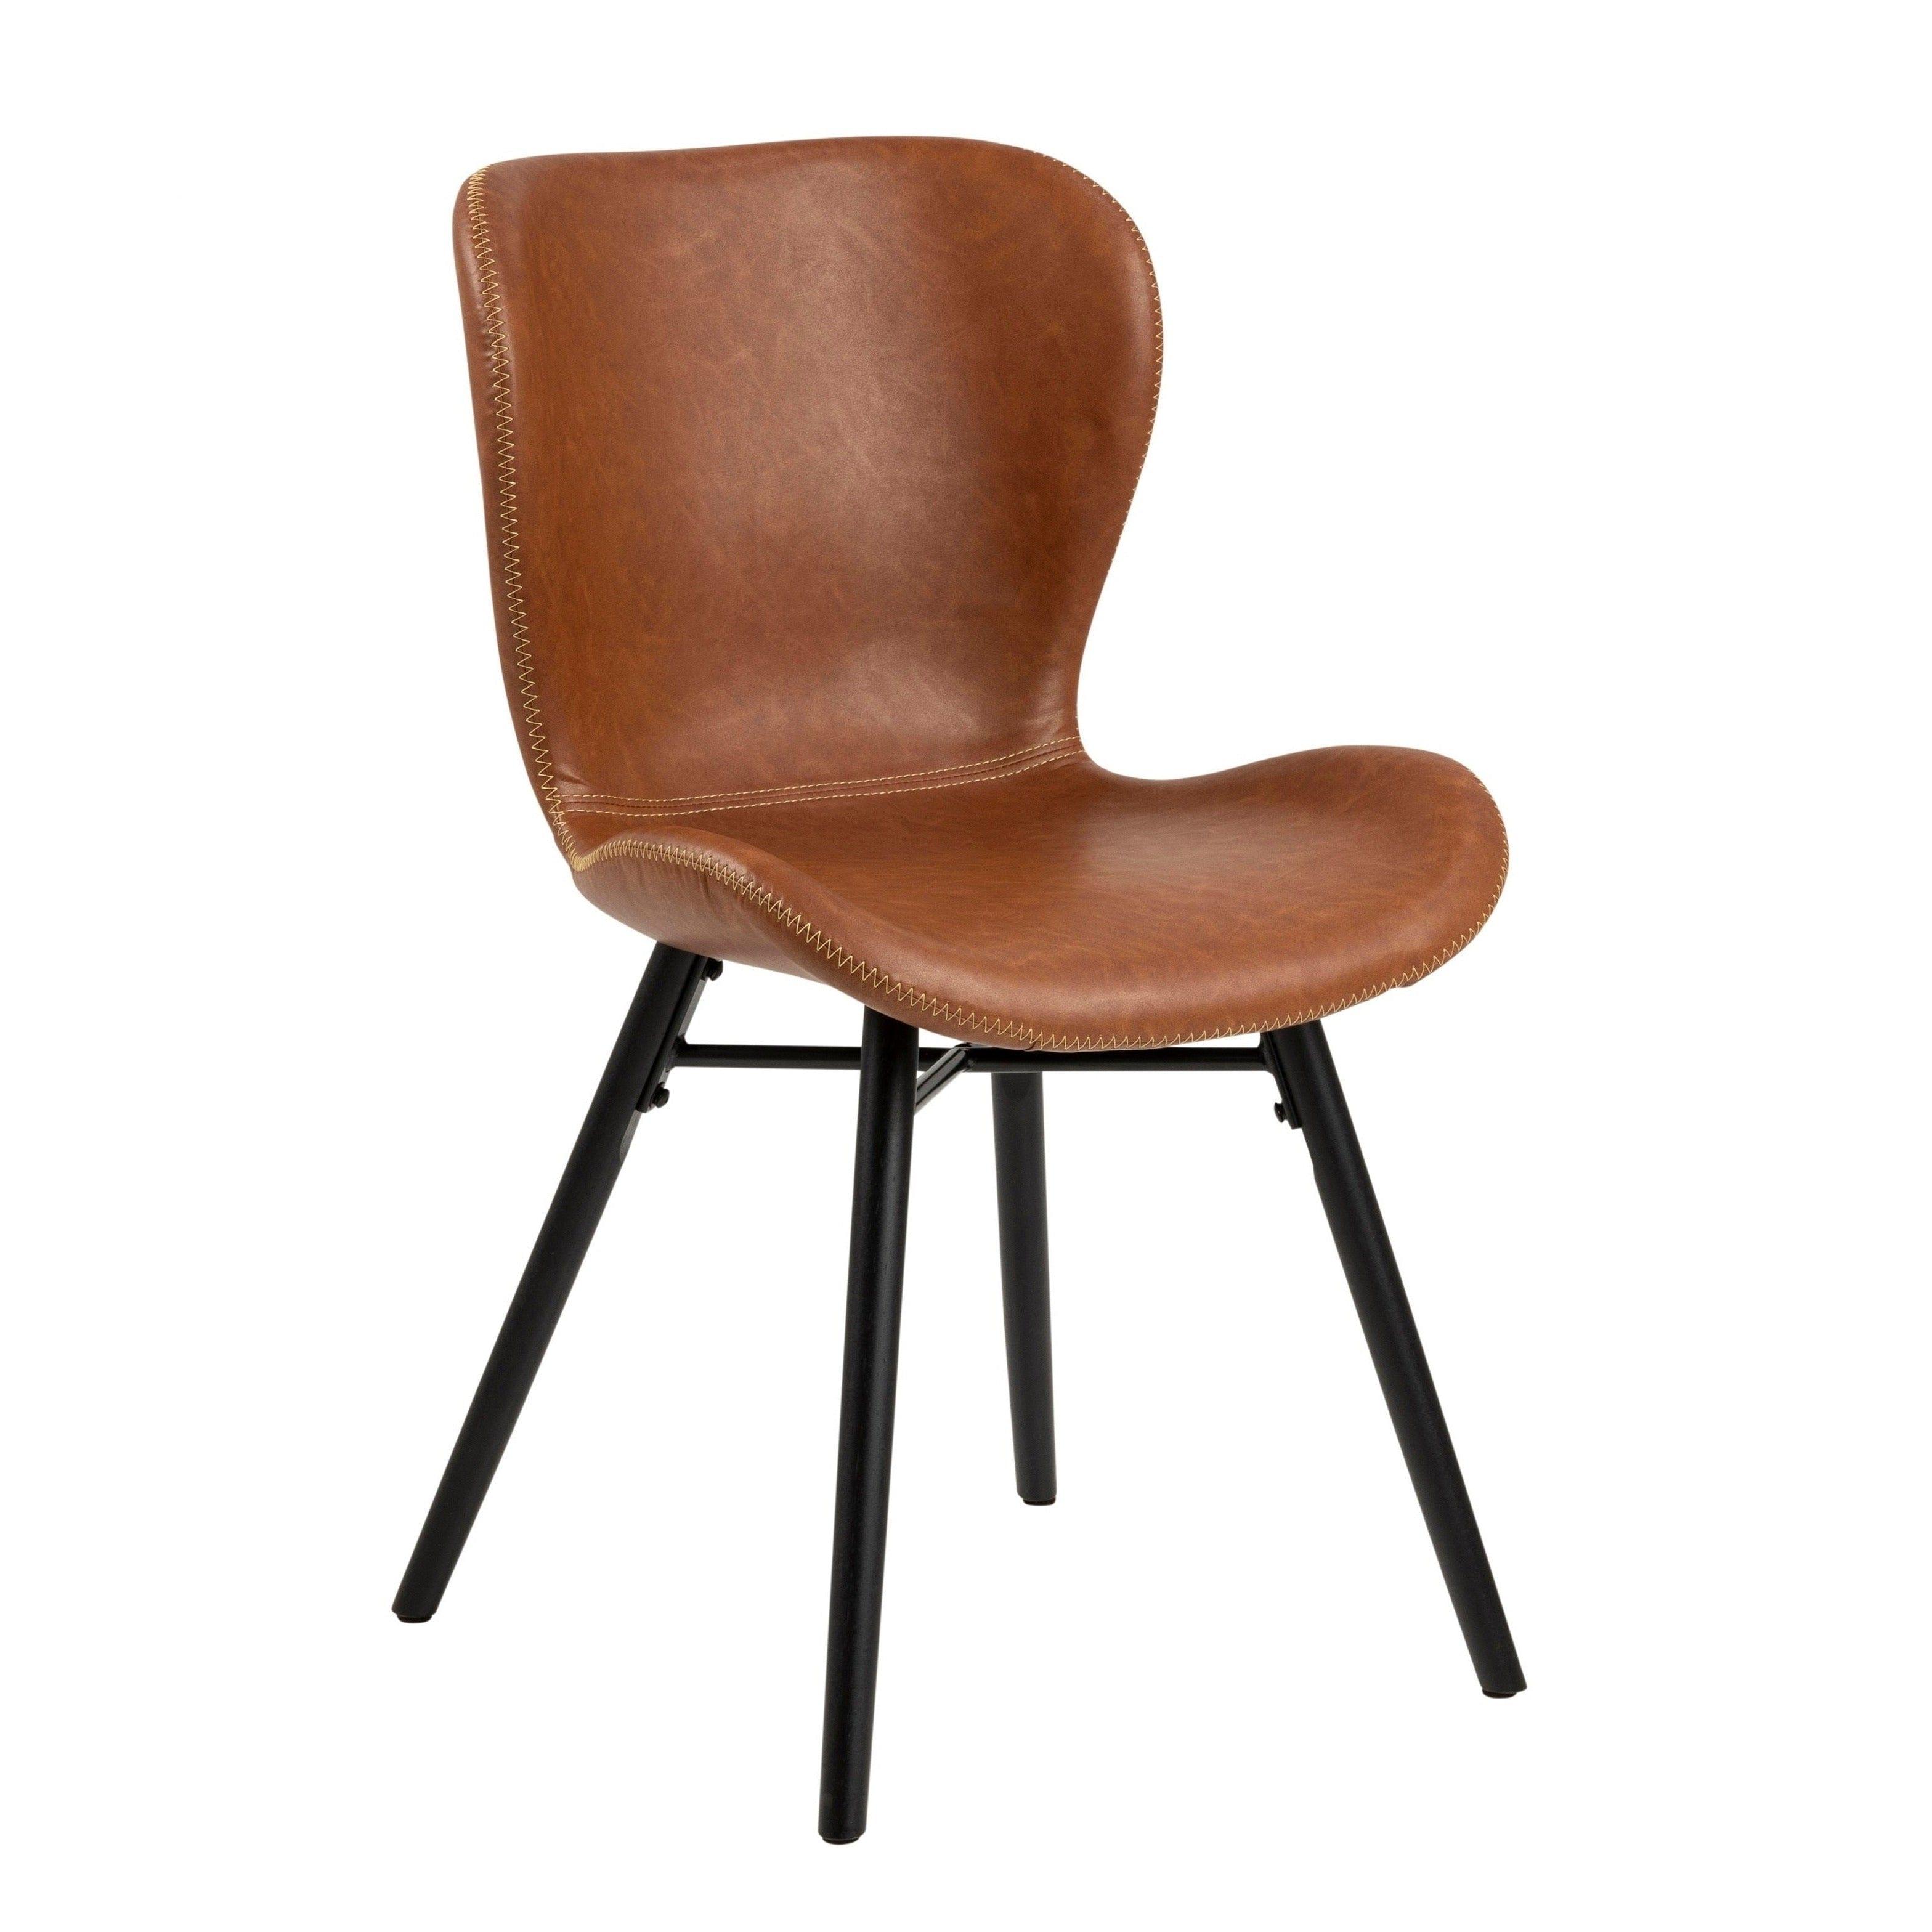 Krzesło skórzane BJORN brandy z czarną podstawą Actona    Eye on Design